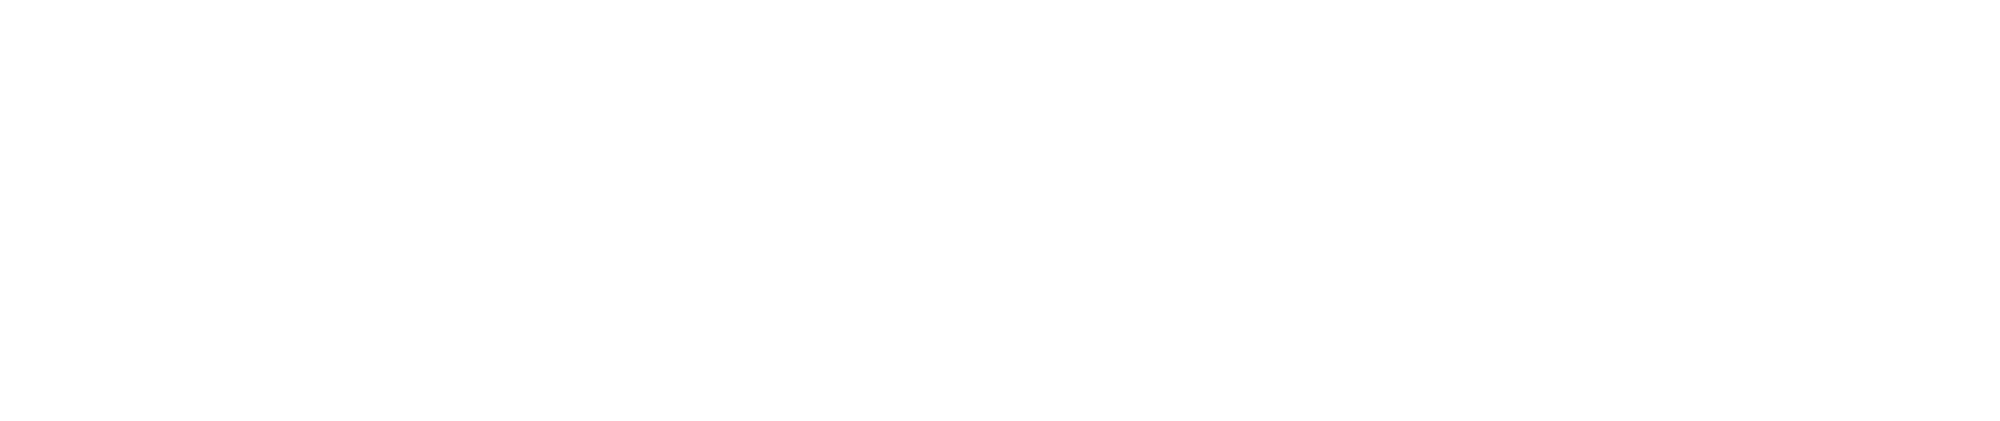 Logo ROOTSHouse_Tavola disegno 1 copia